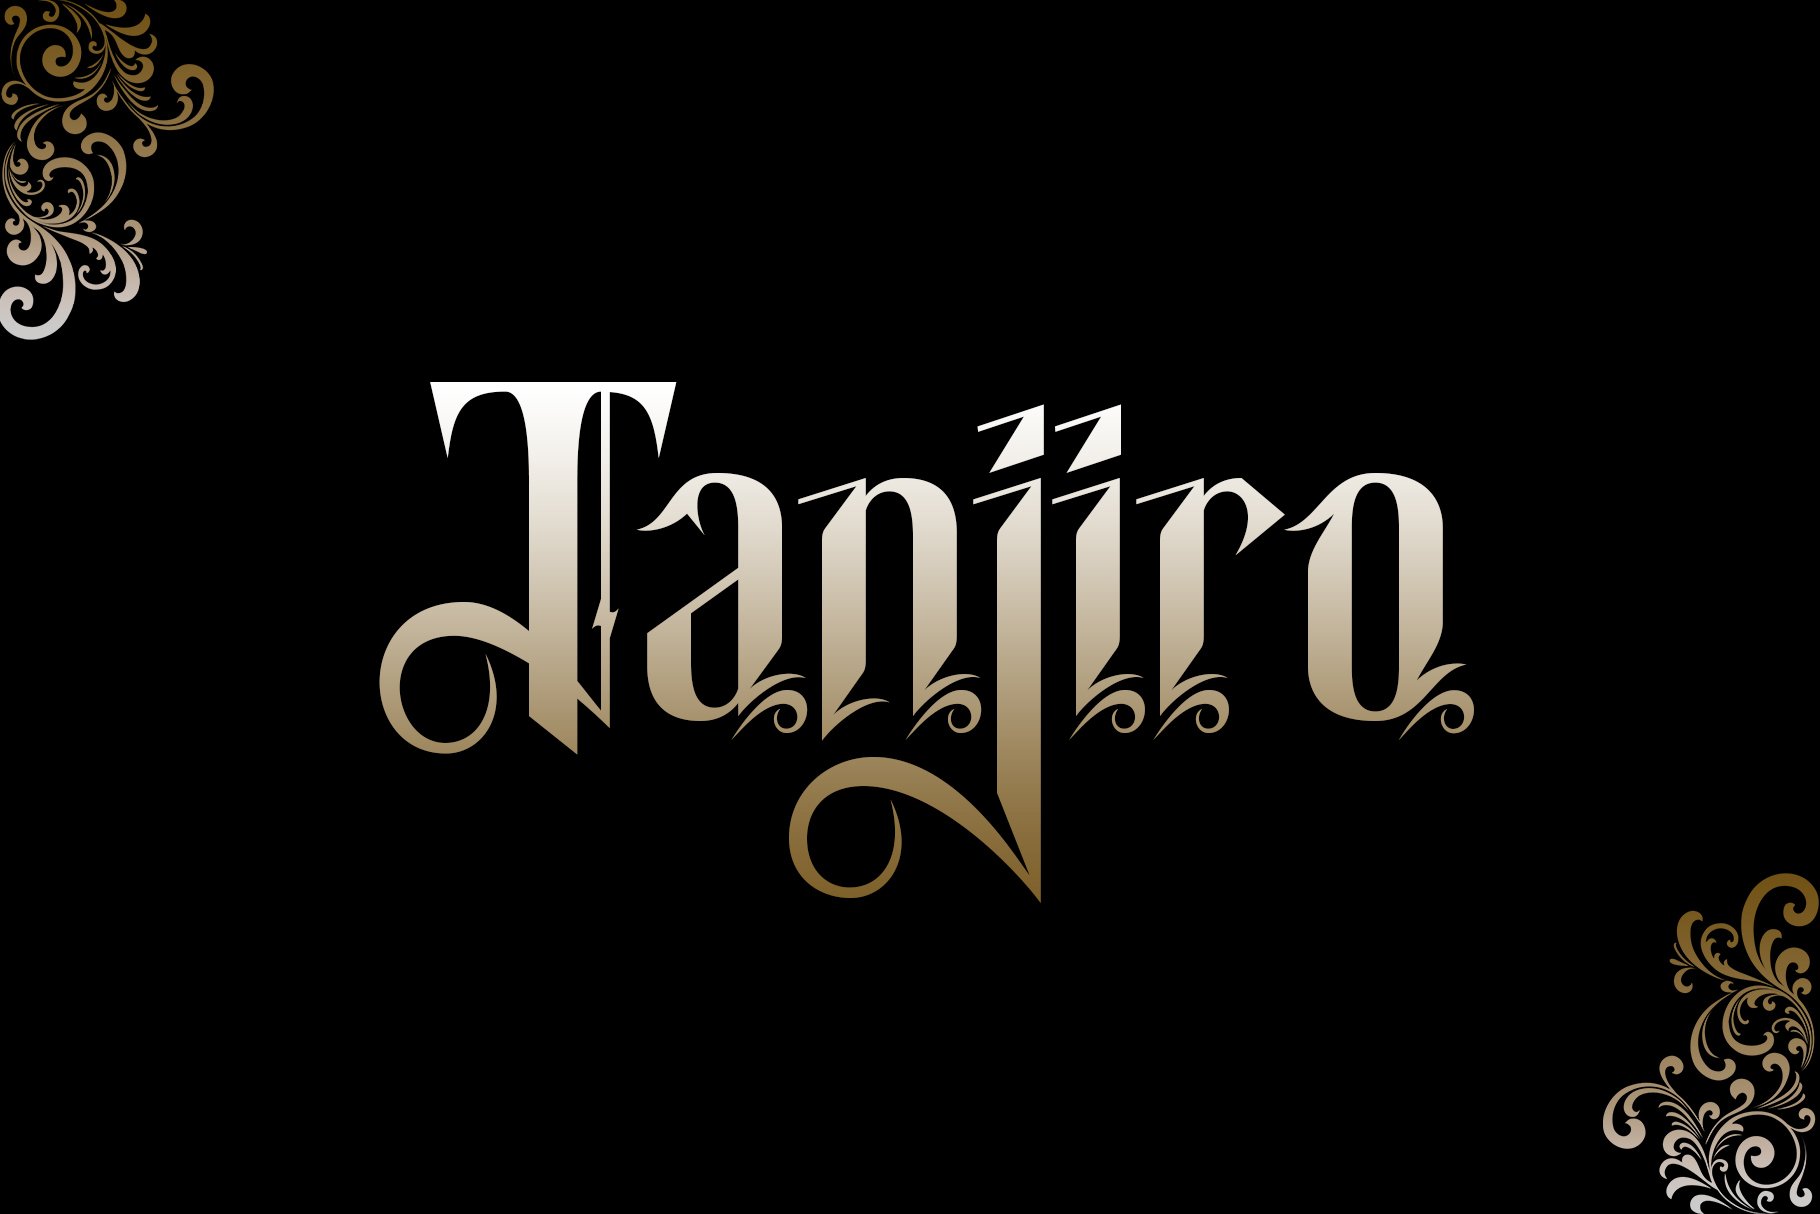 Tanjiro cover image.